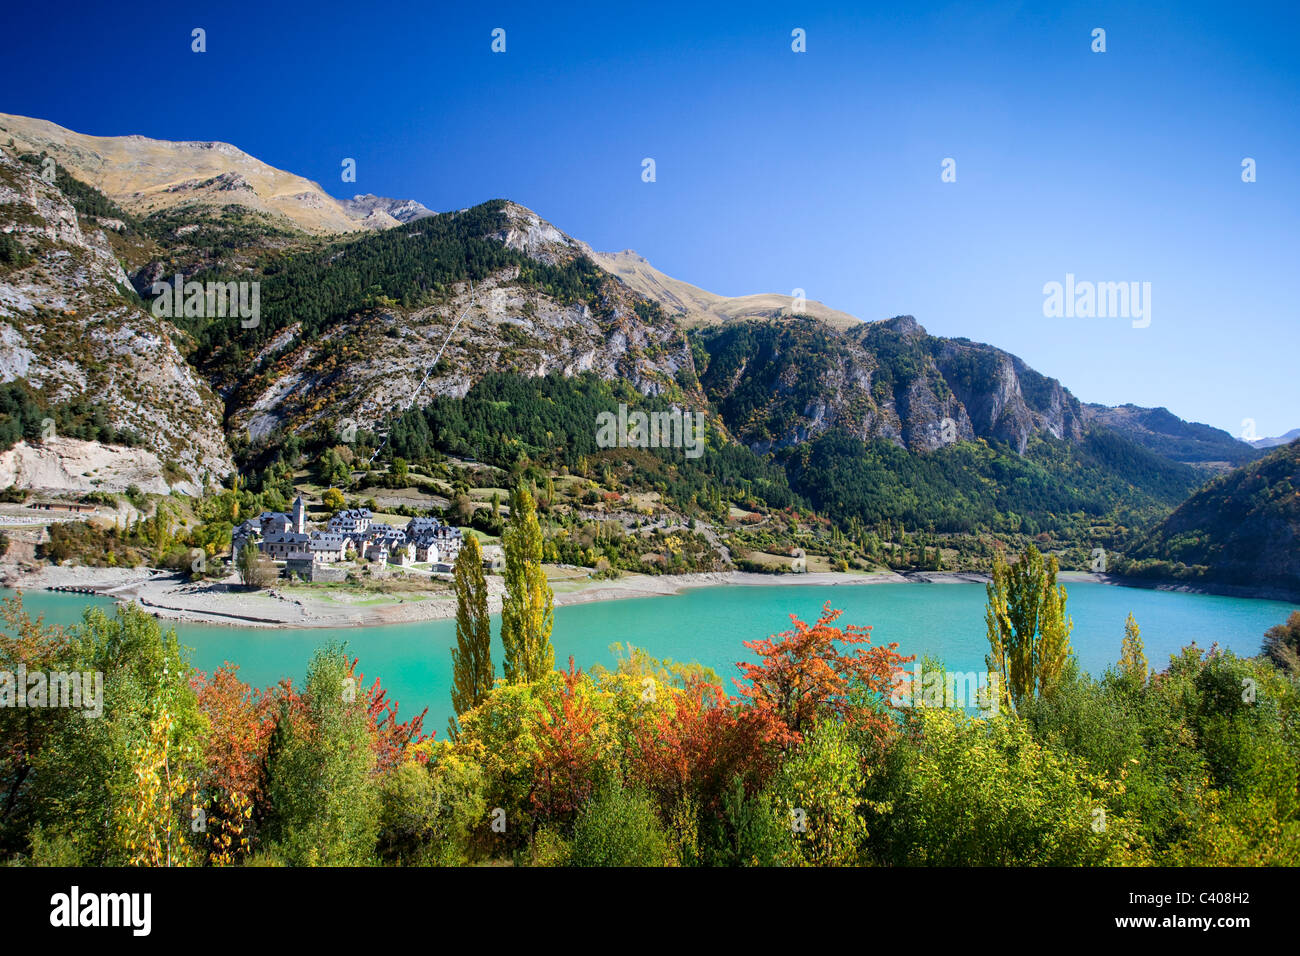 Spain, Europe, Aragon, Huesca, Pyrenees, Lanuza, mountains, lake, sea, trees, autumn Stock Photo